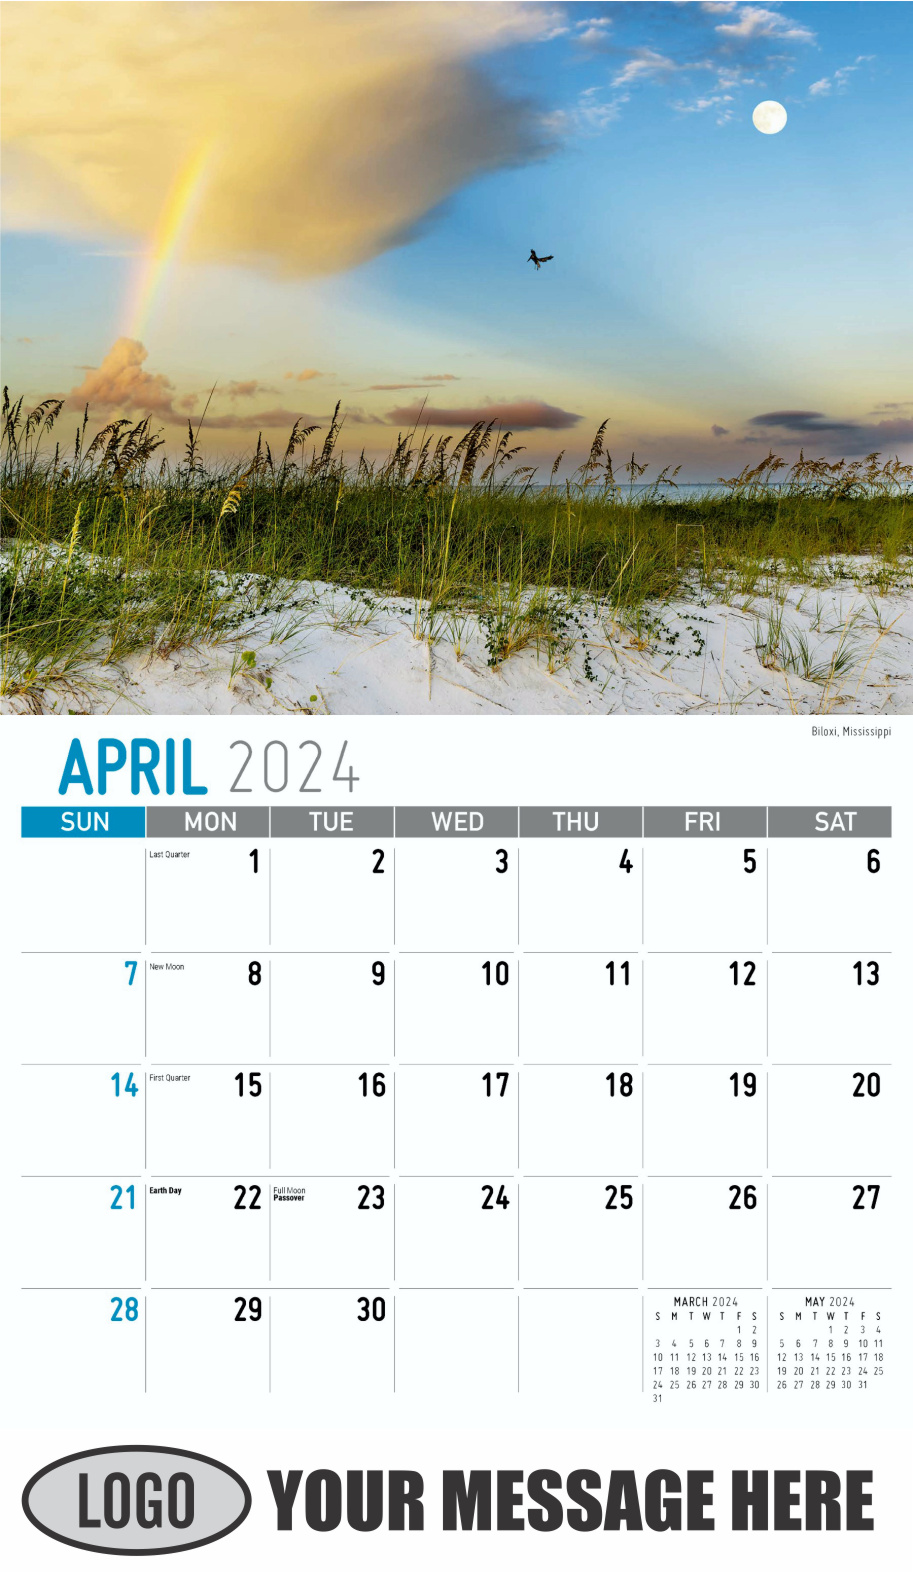 Scenes of Southeast USA 2024 Business Promo Wall Calendar - April